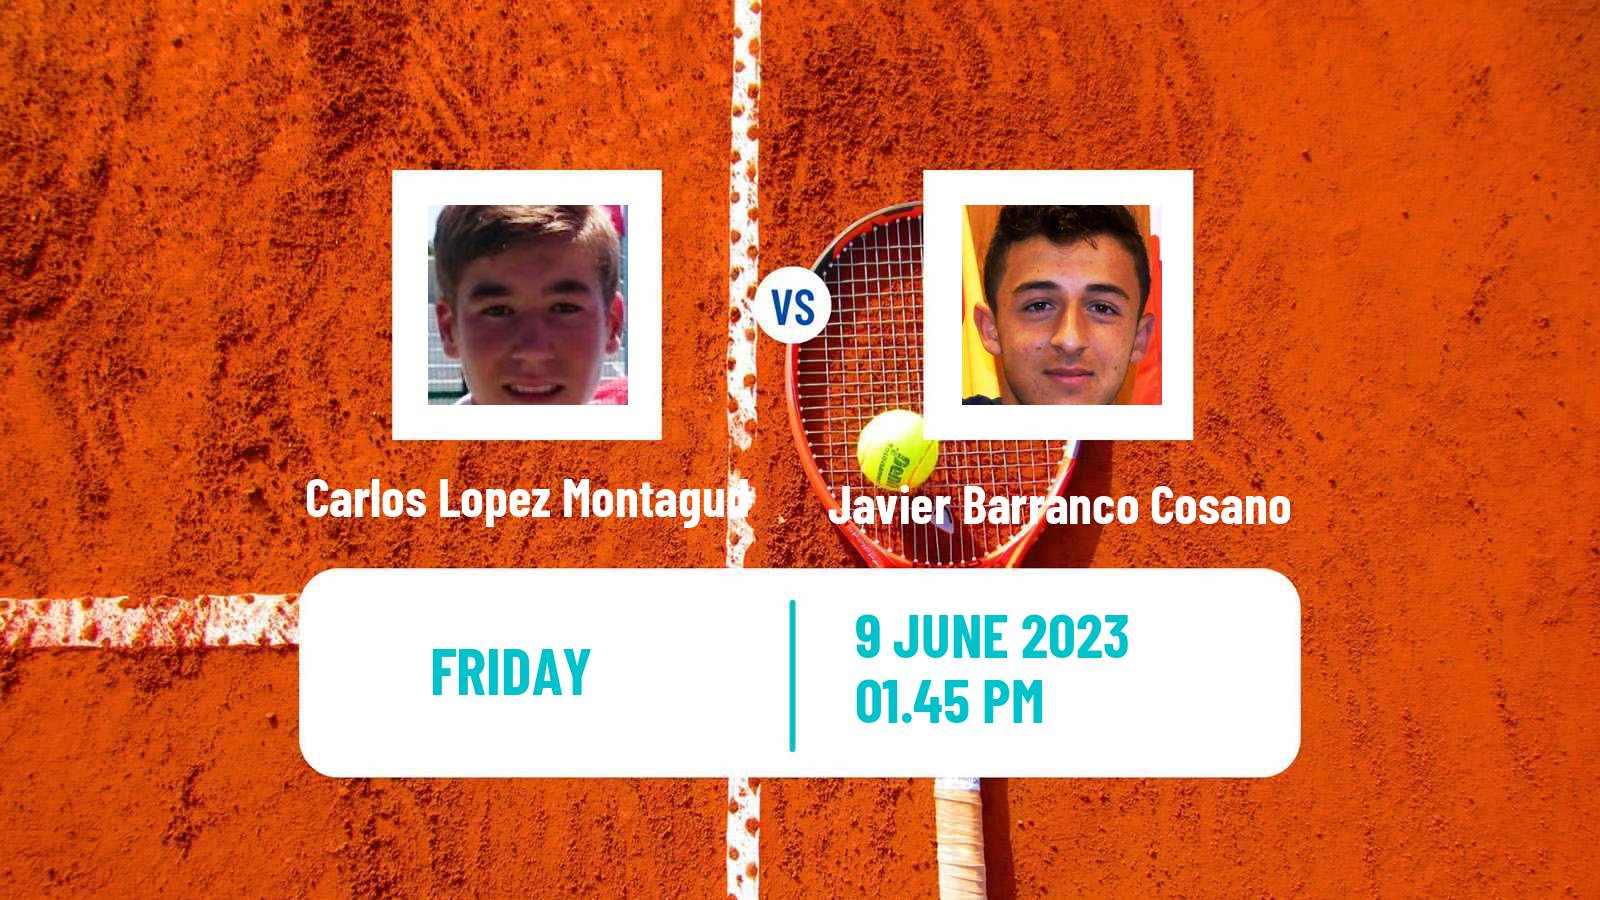 Tennis ITF M25 Cordoba Men Carlos Lopez Montagud - Javier Barranco Cosano